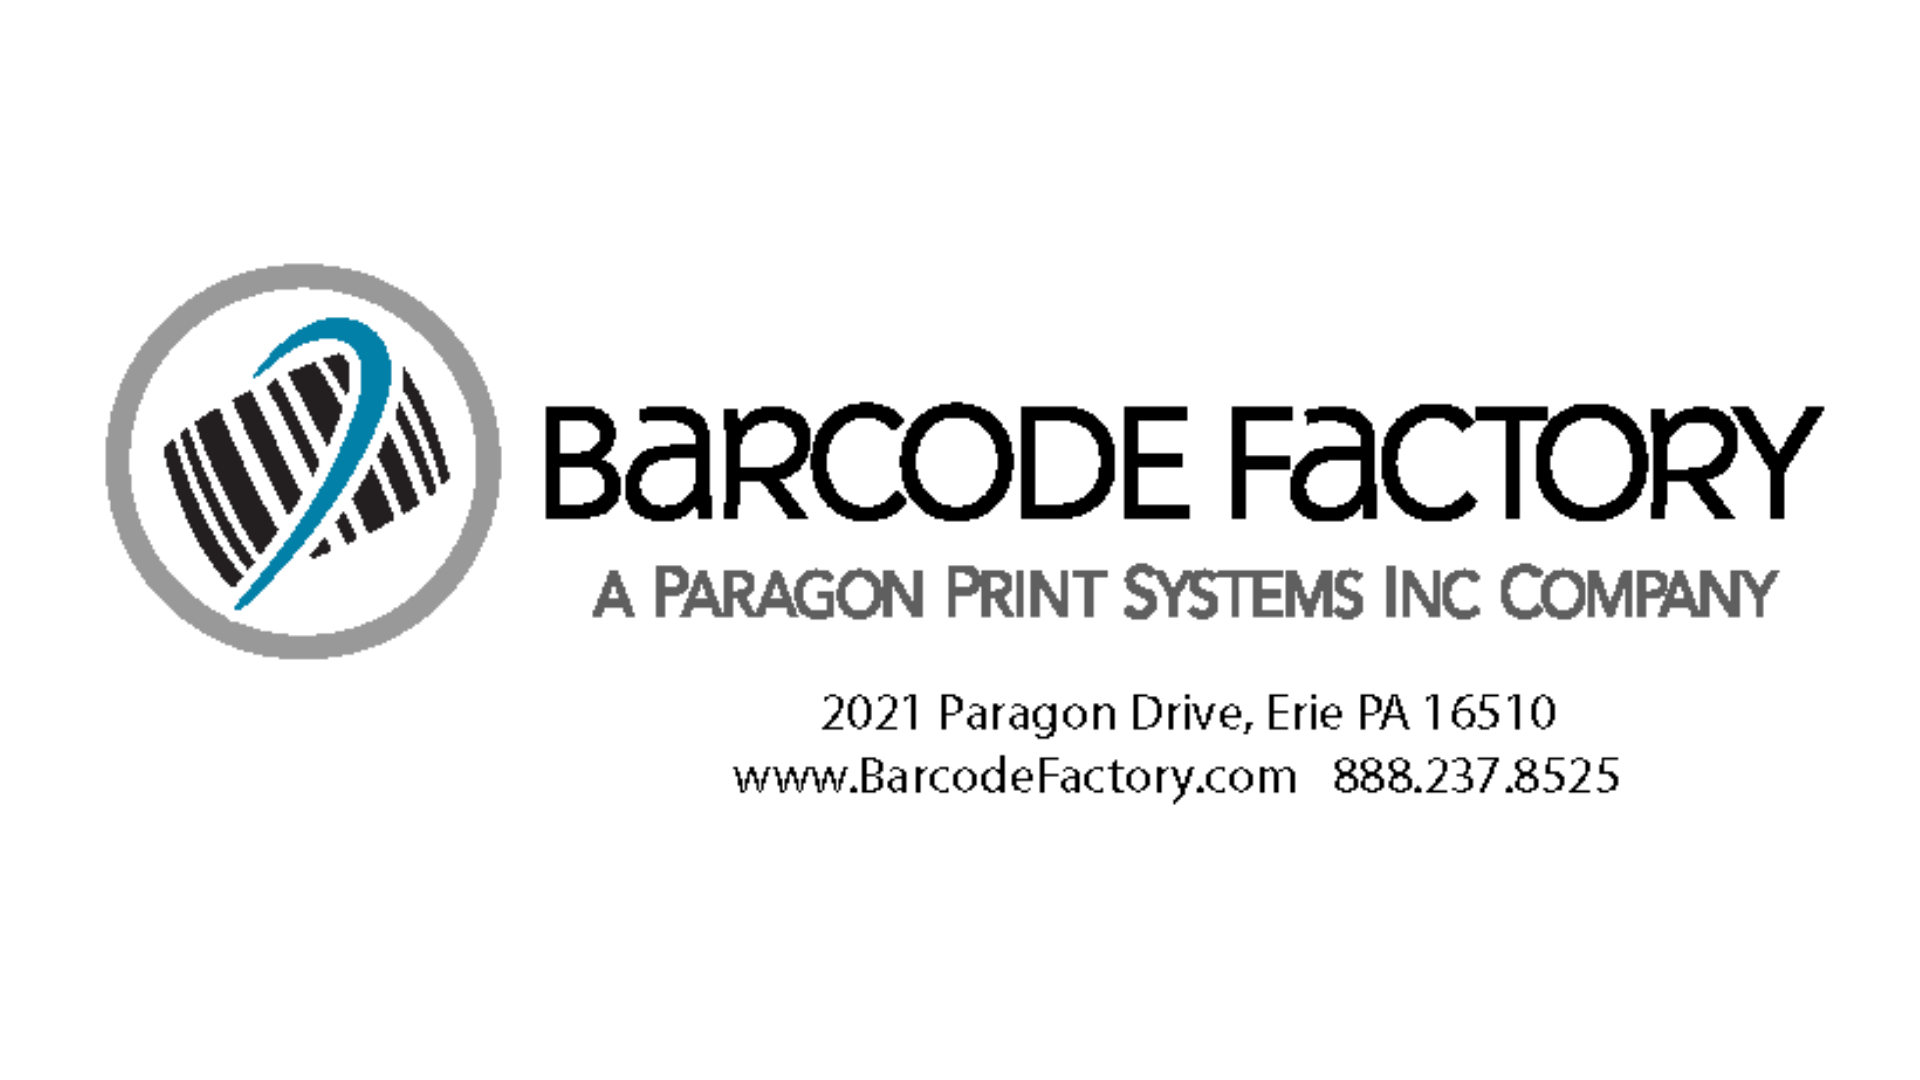 Paragon Print and Barcode Factory